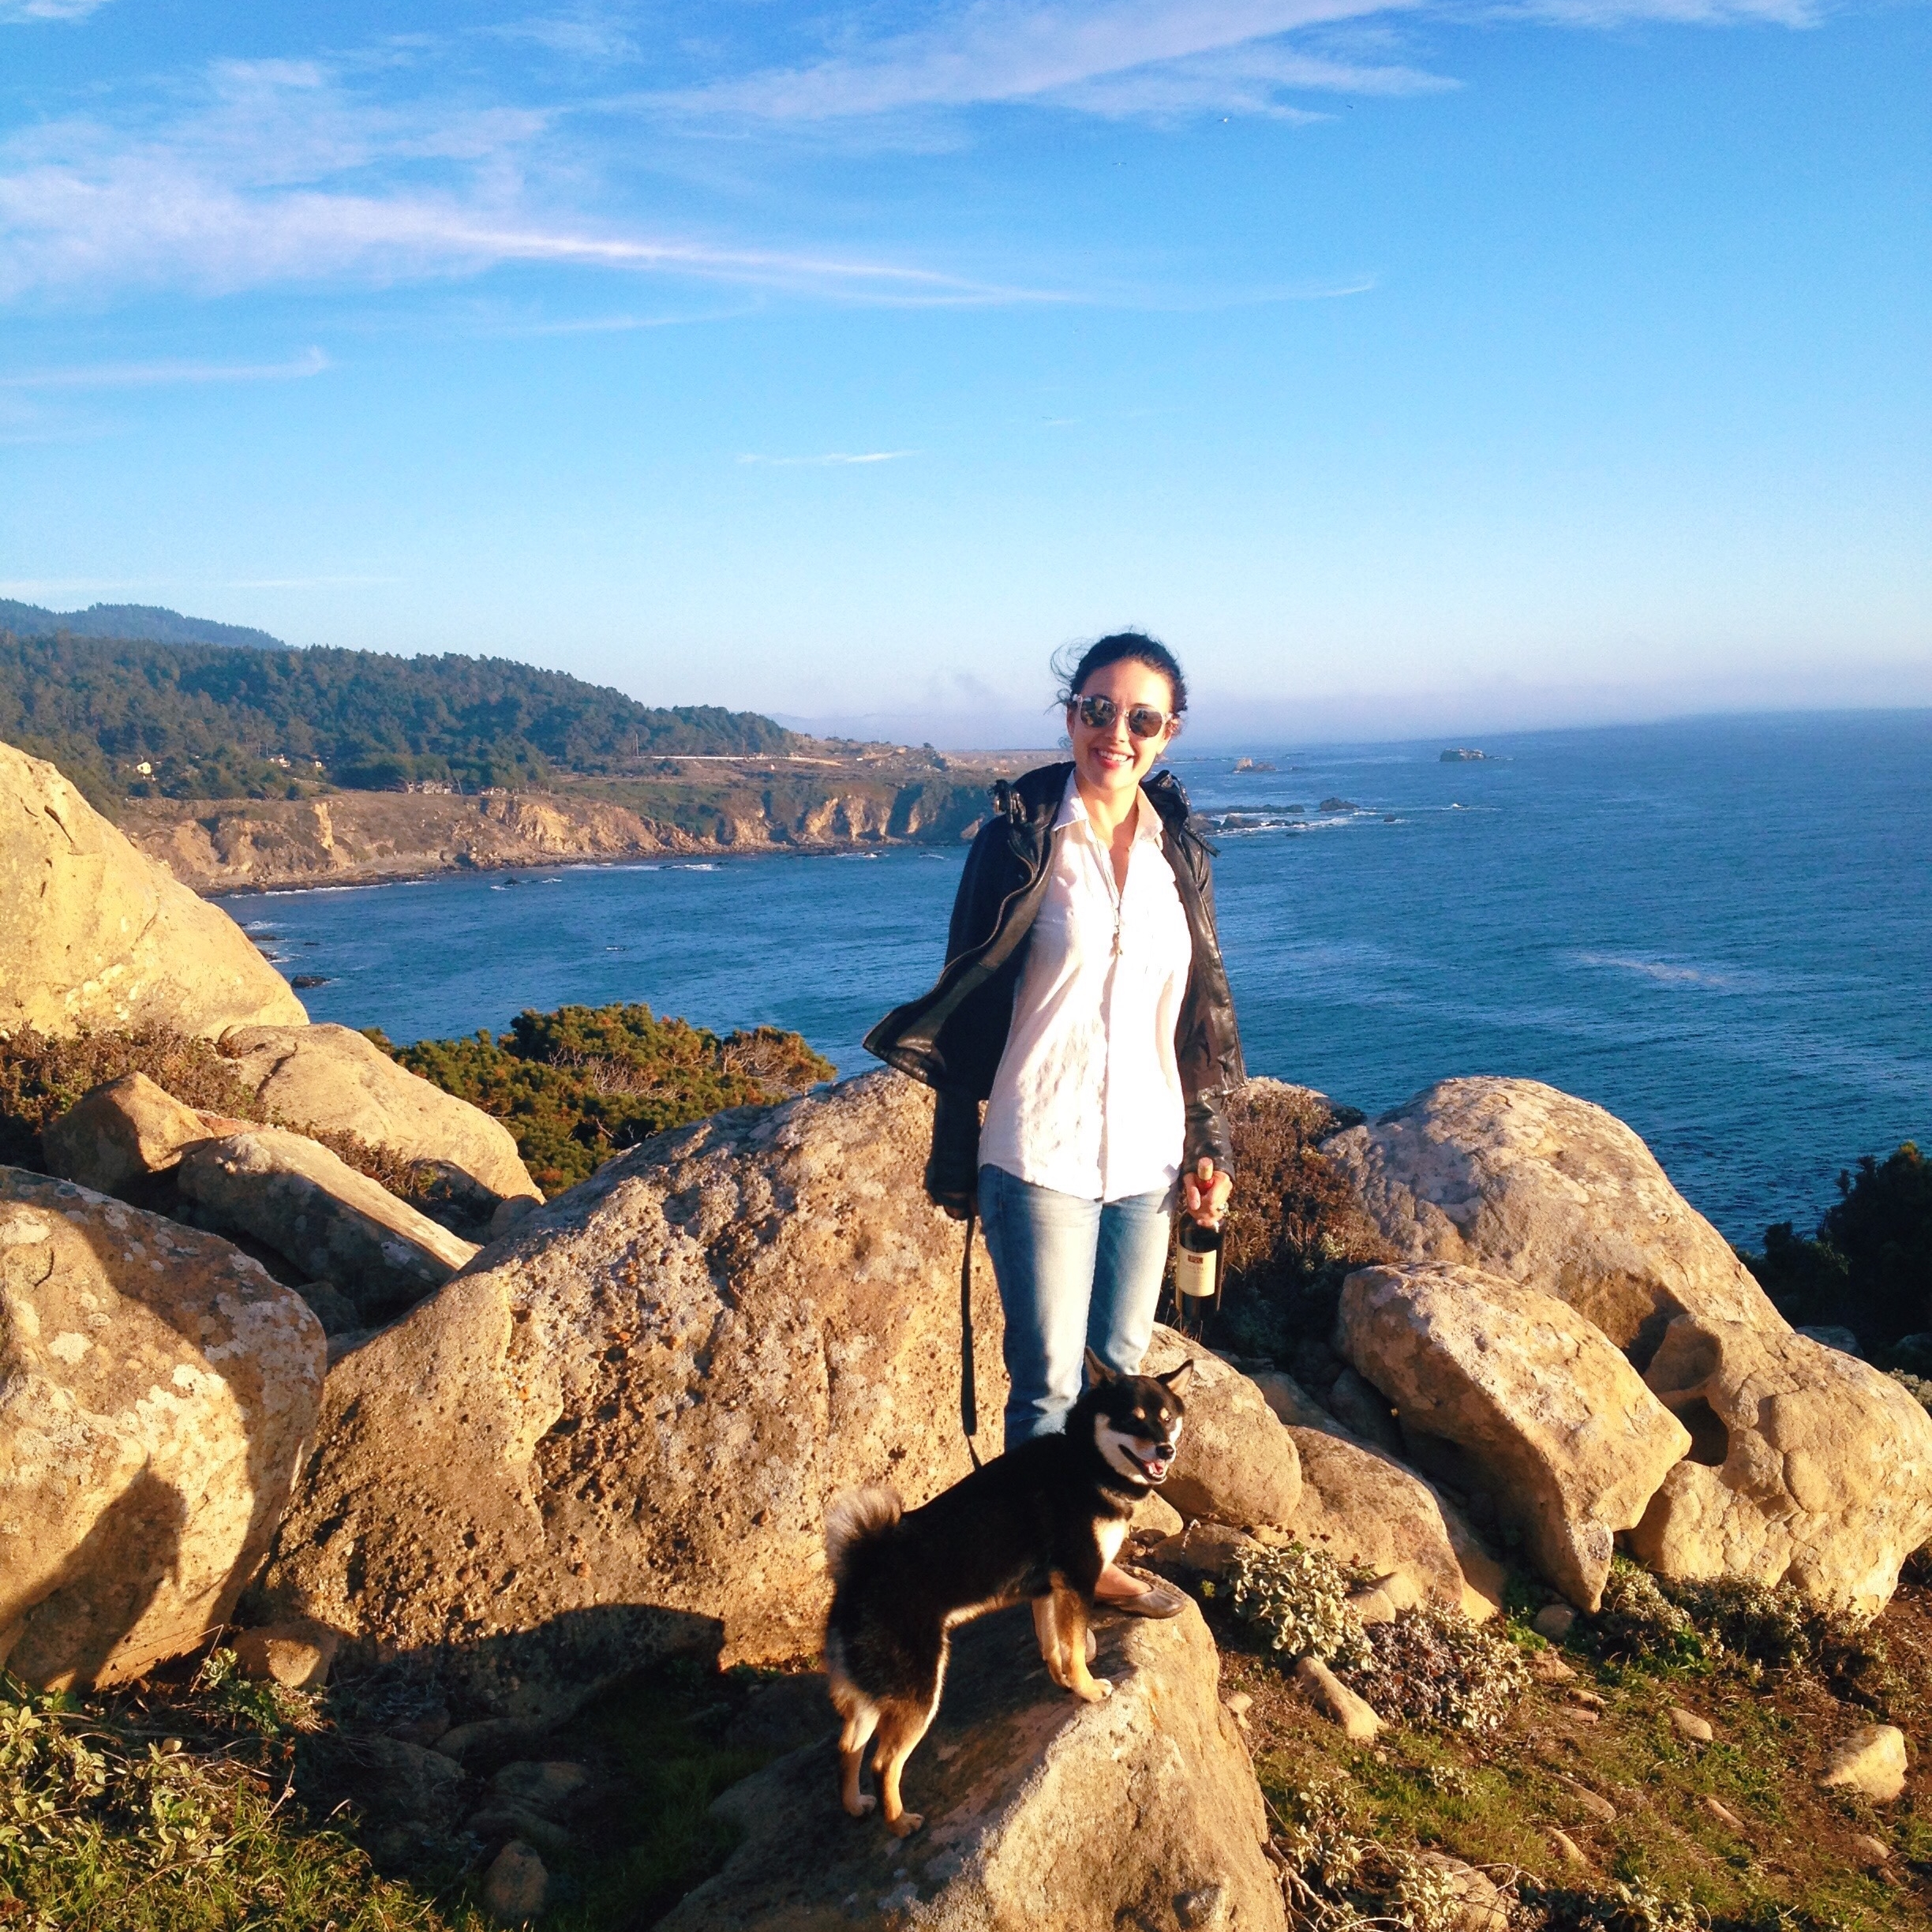 The California coast: Favorite vacation spot